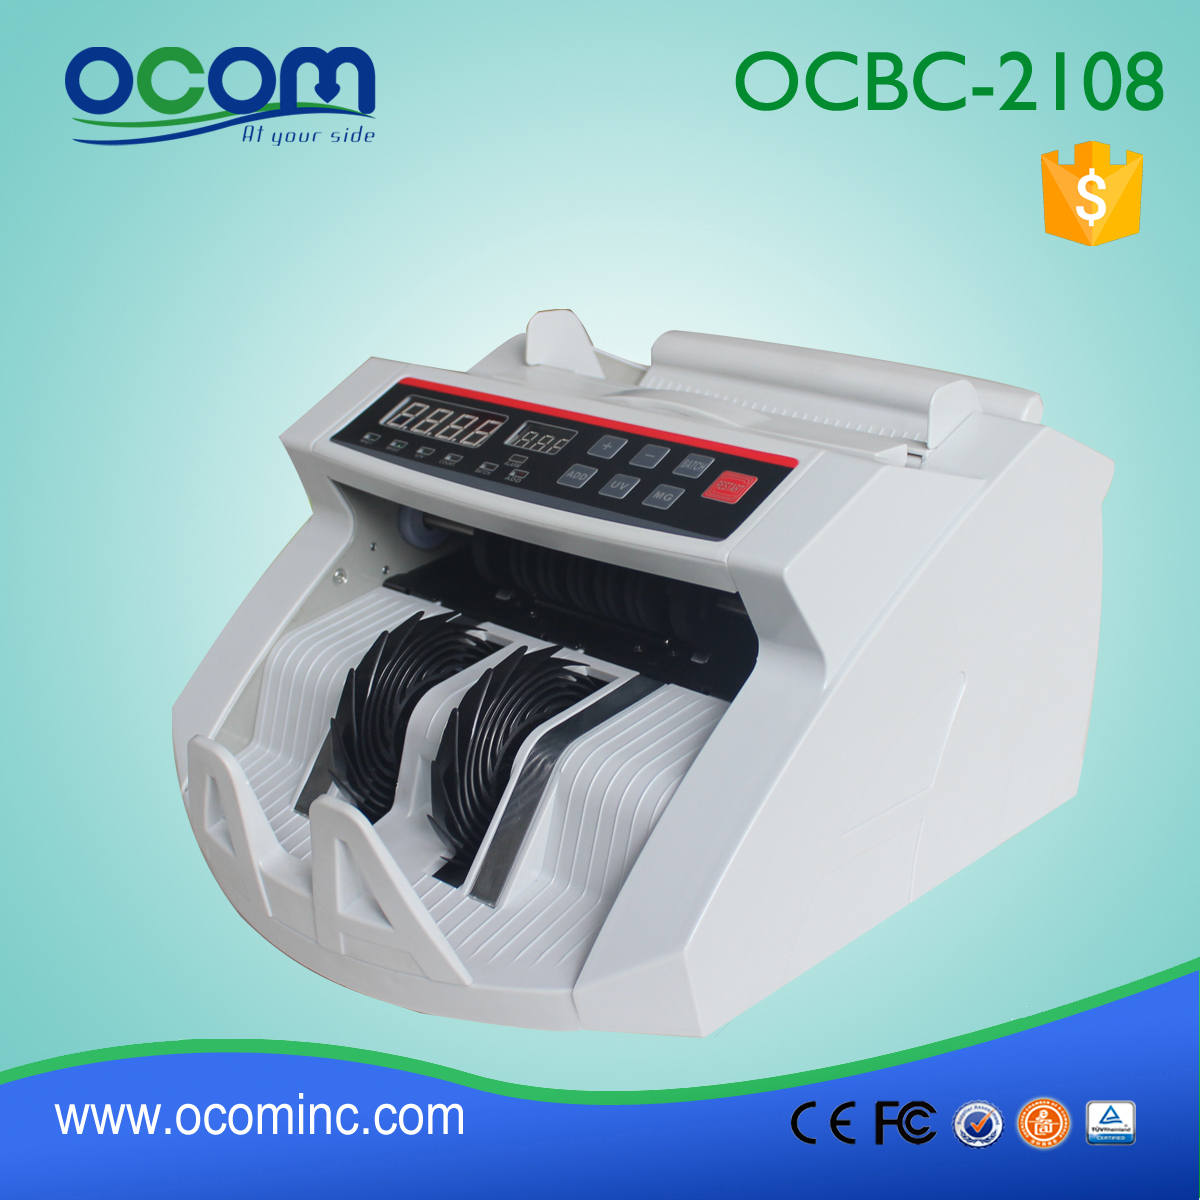 OCBC-2108：用假探测器 的纸币点钞机